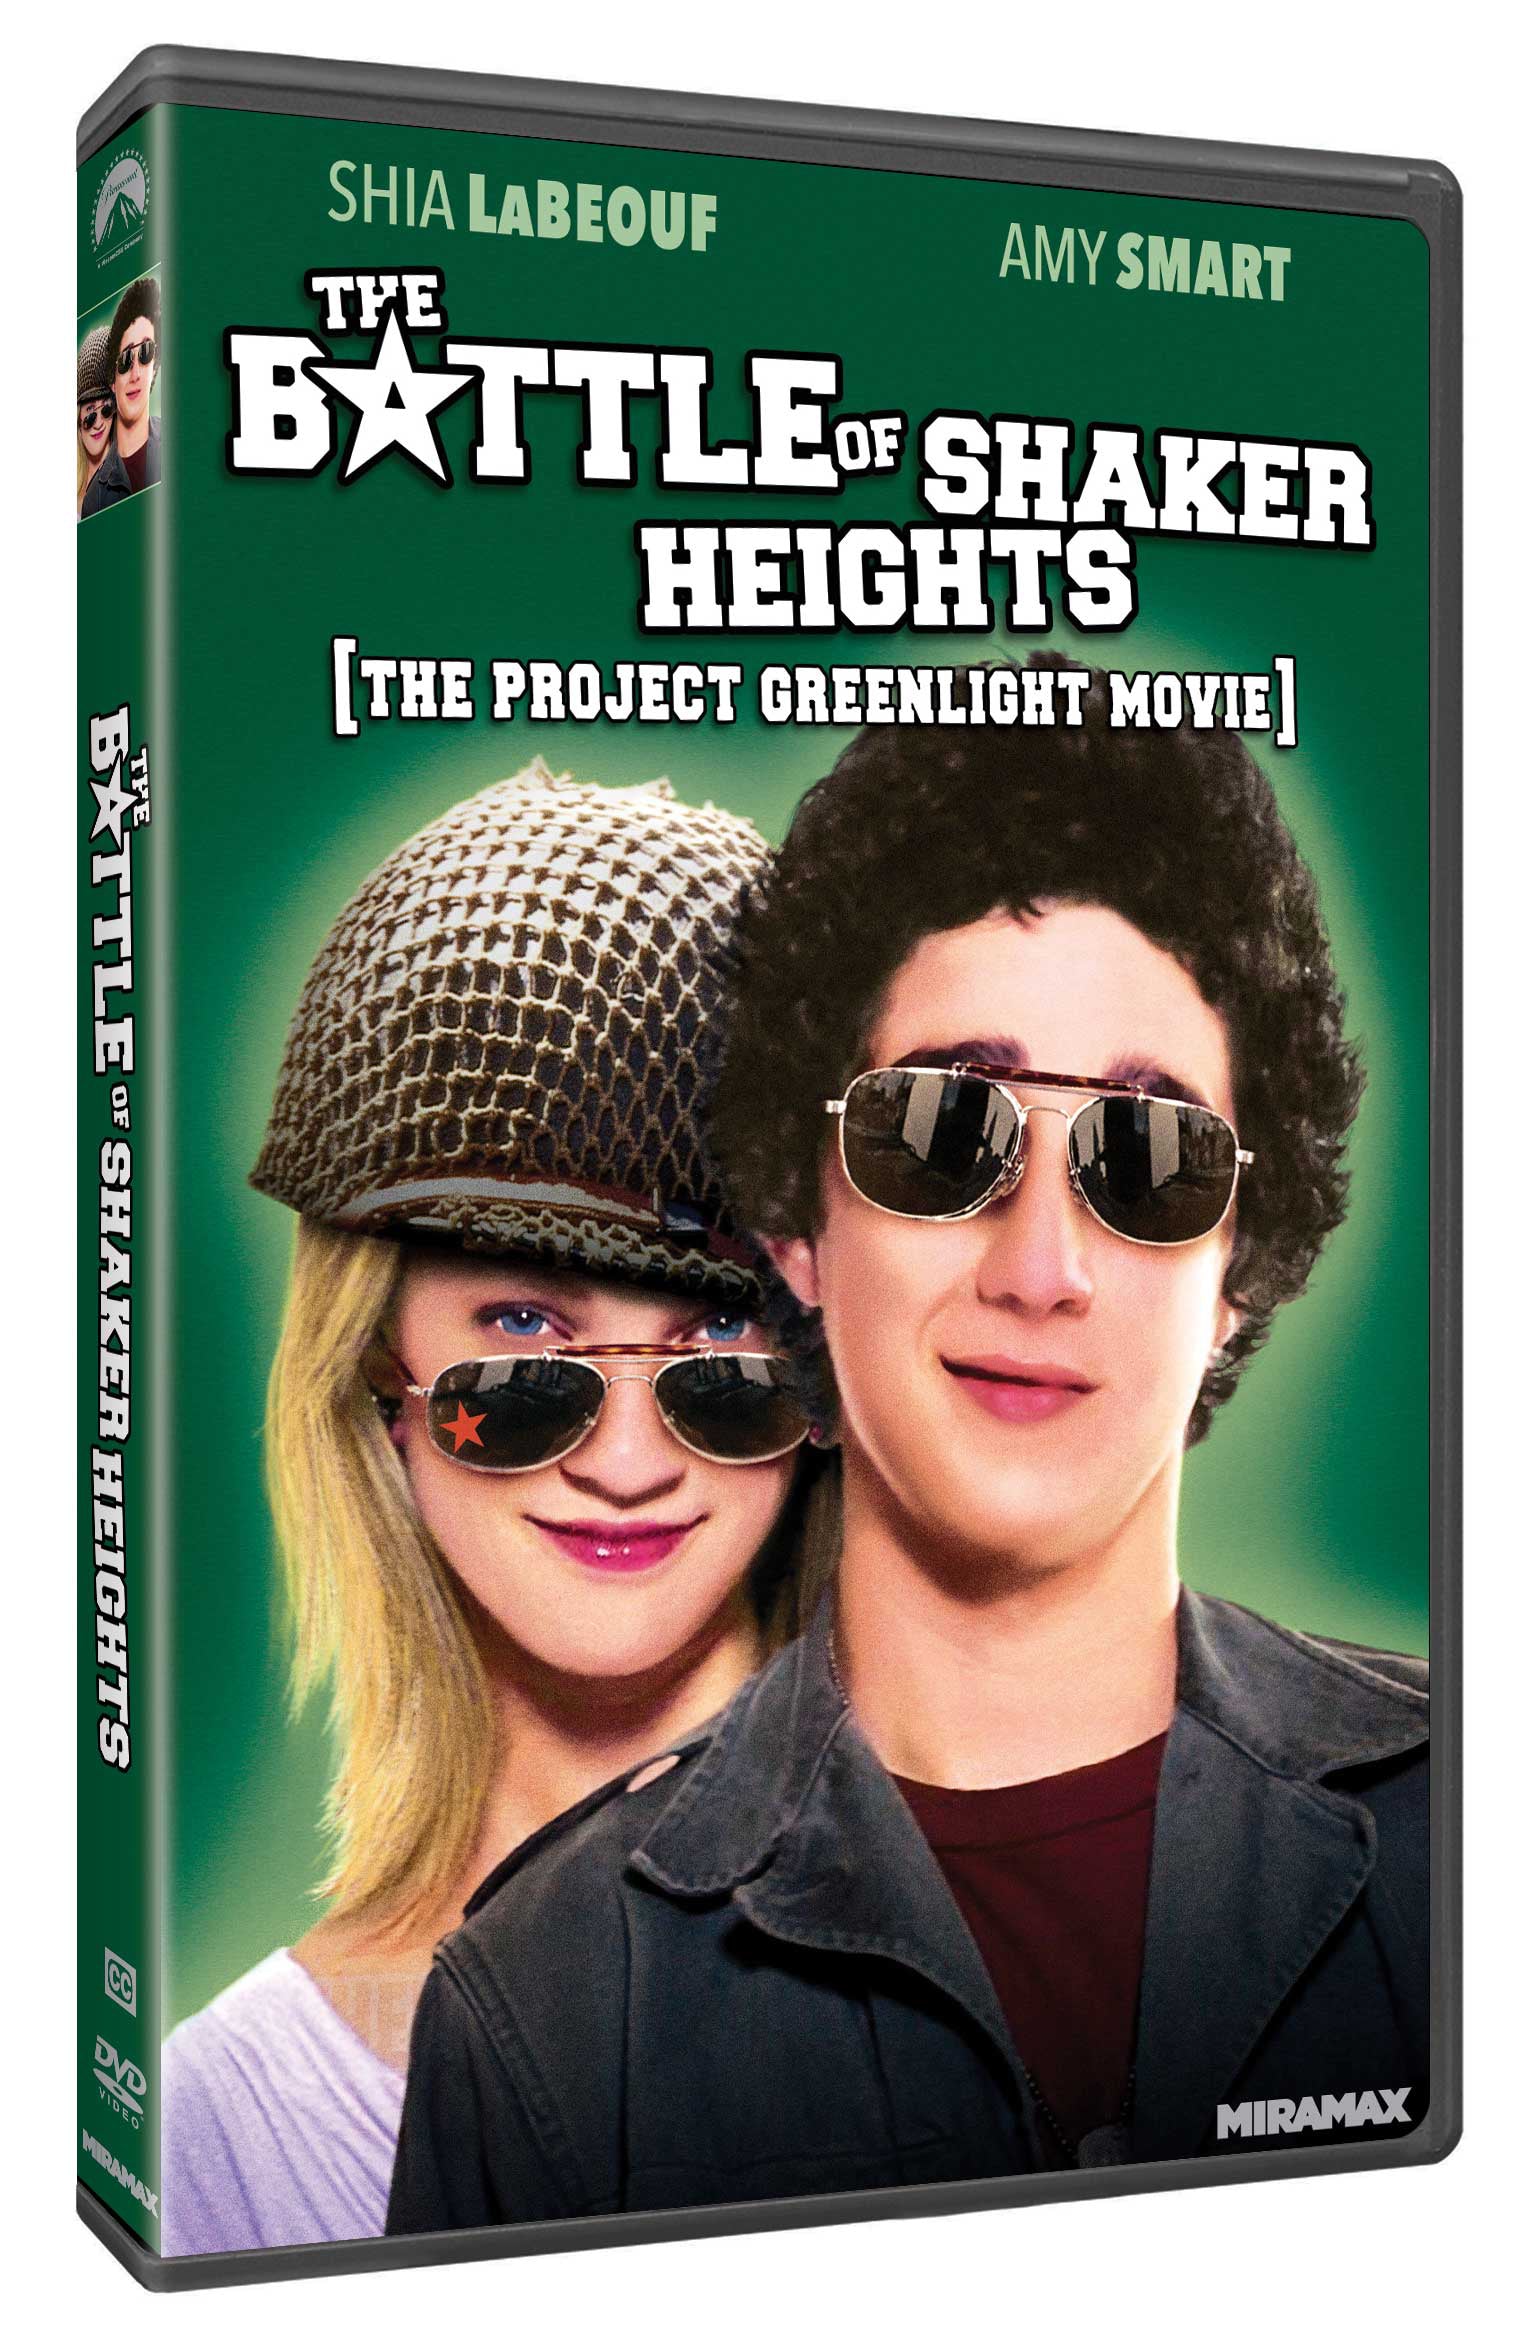 Battle of Shaker Heights cover art